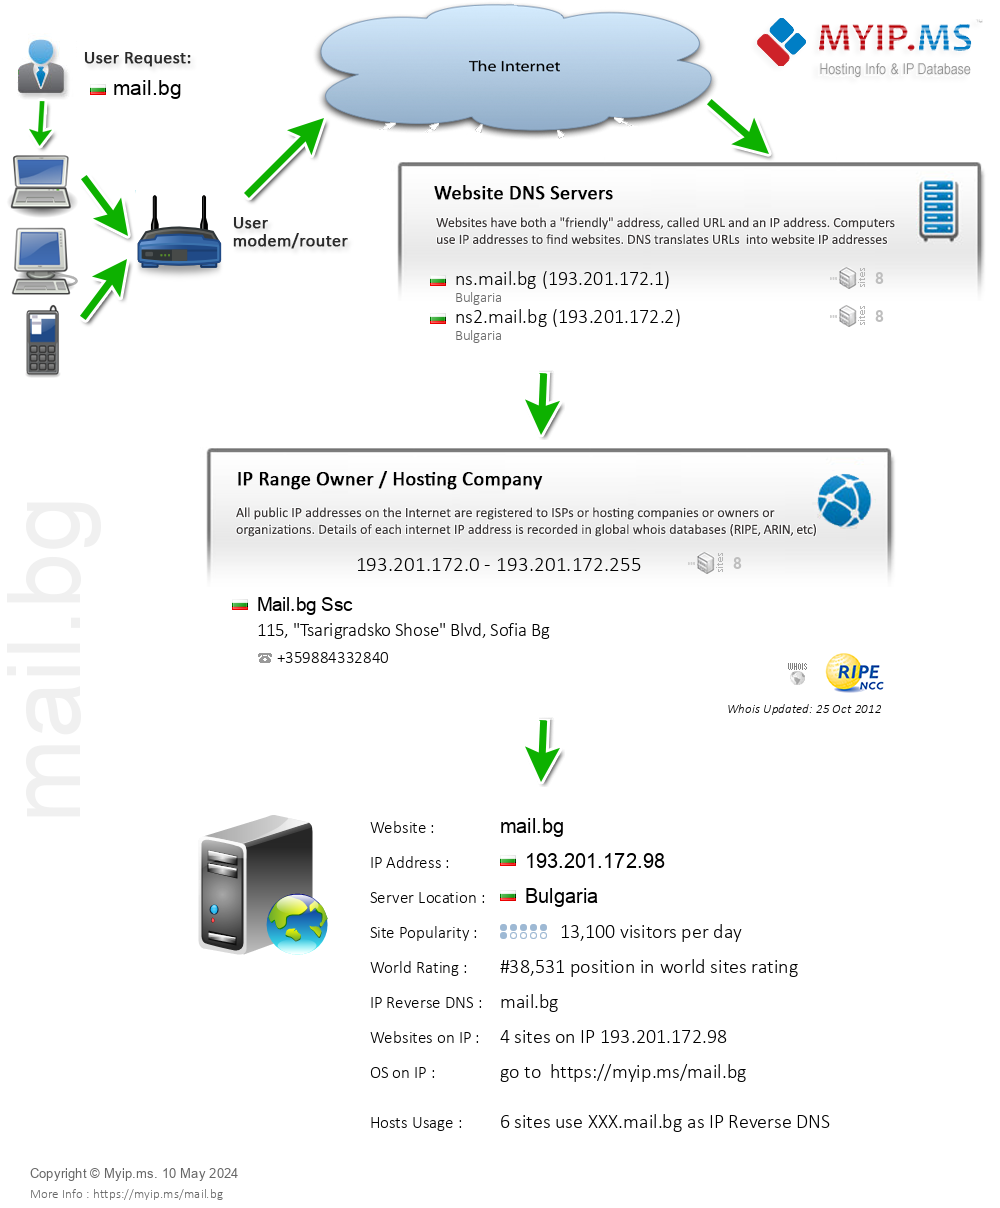 Mail.bg - Website Hosting Visual IP Diagram